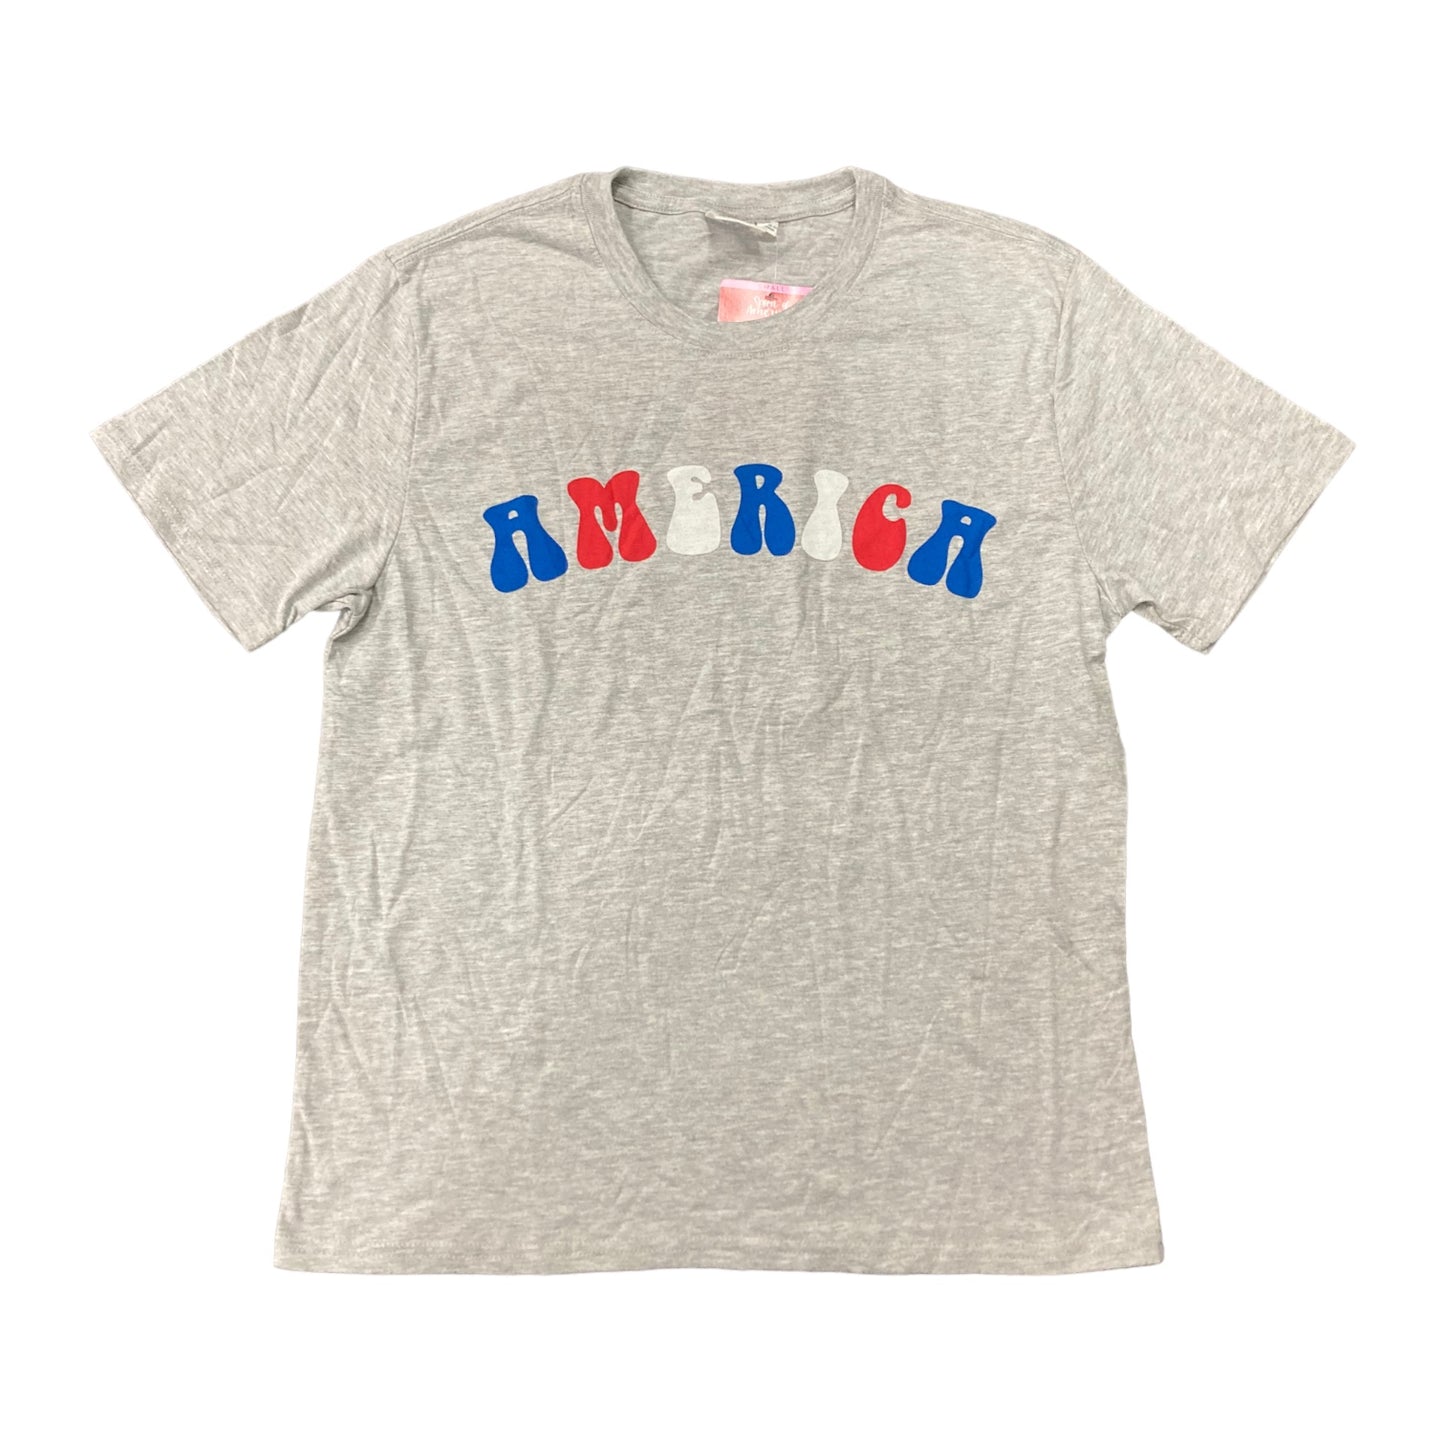 Spirit Of America Women's PatrioticAmericana Short Sleeve Graphic T-Shirt